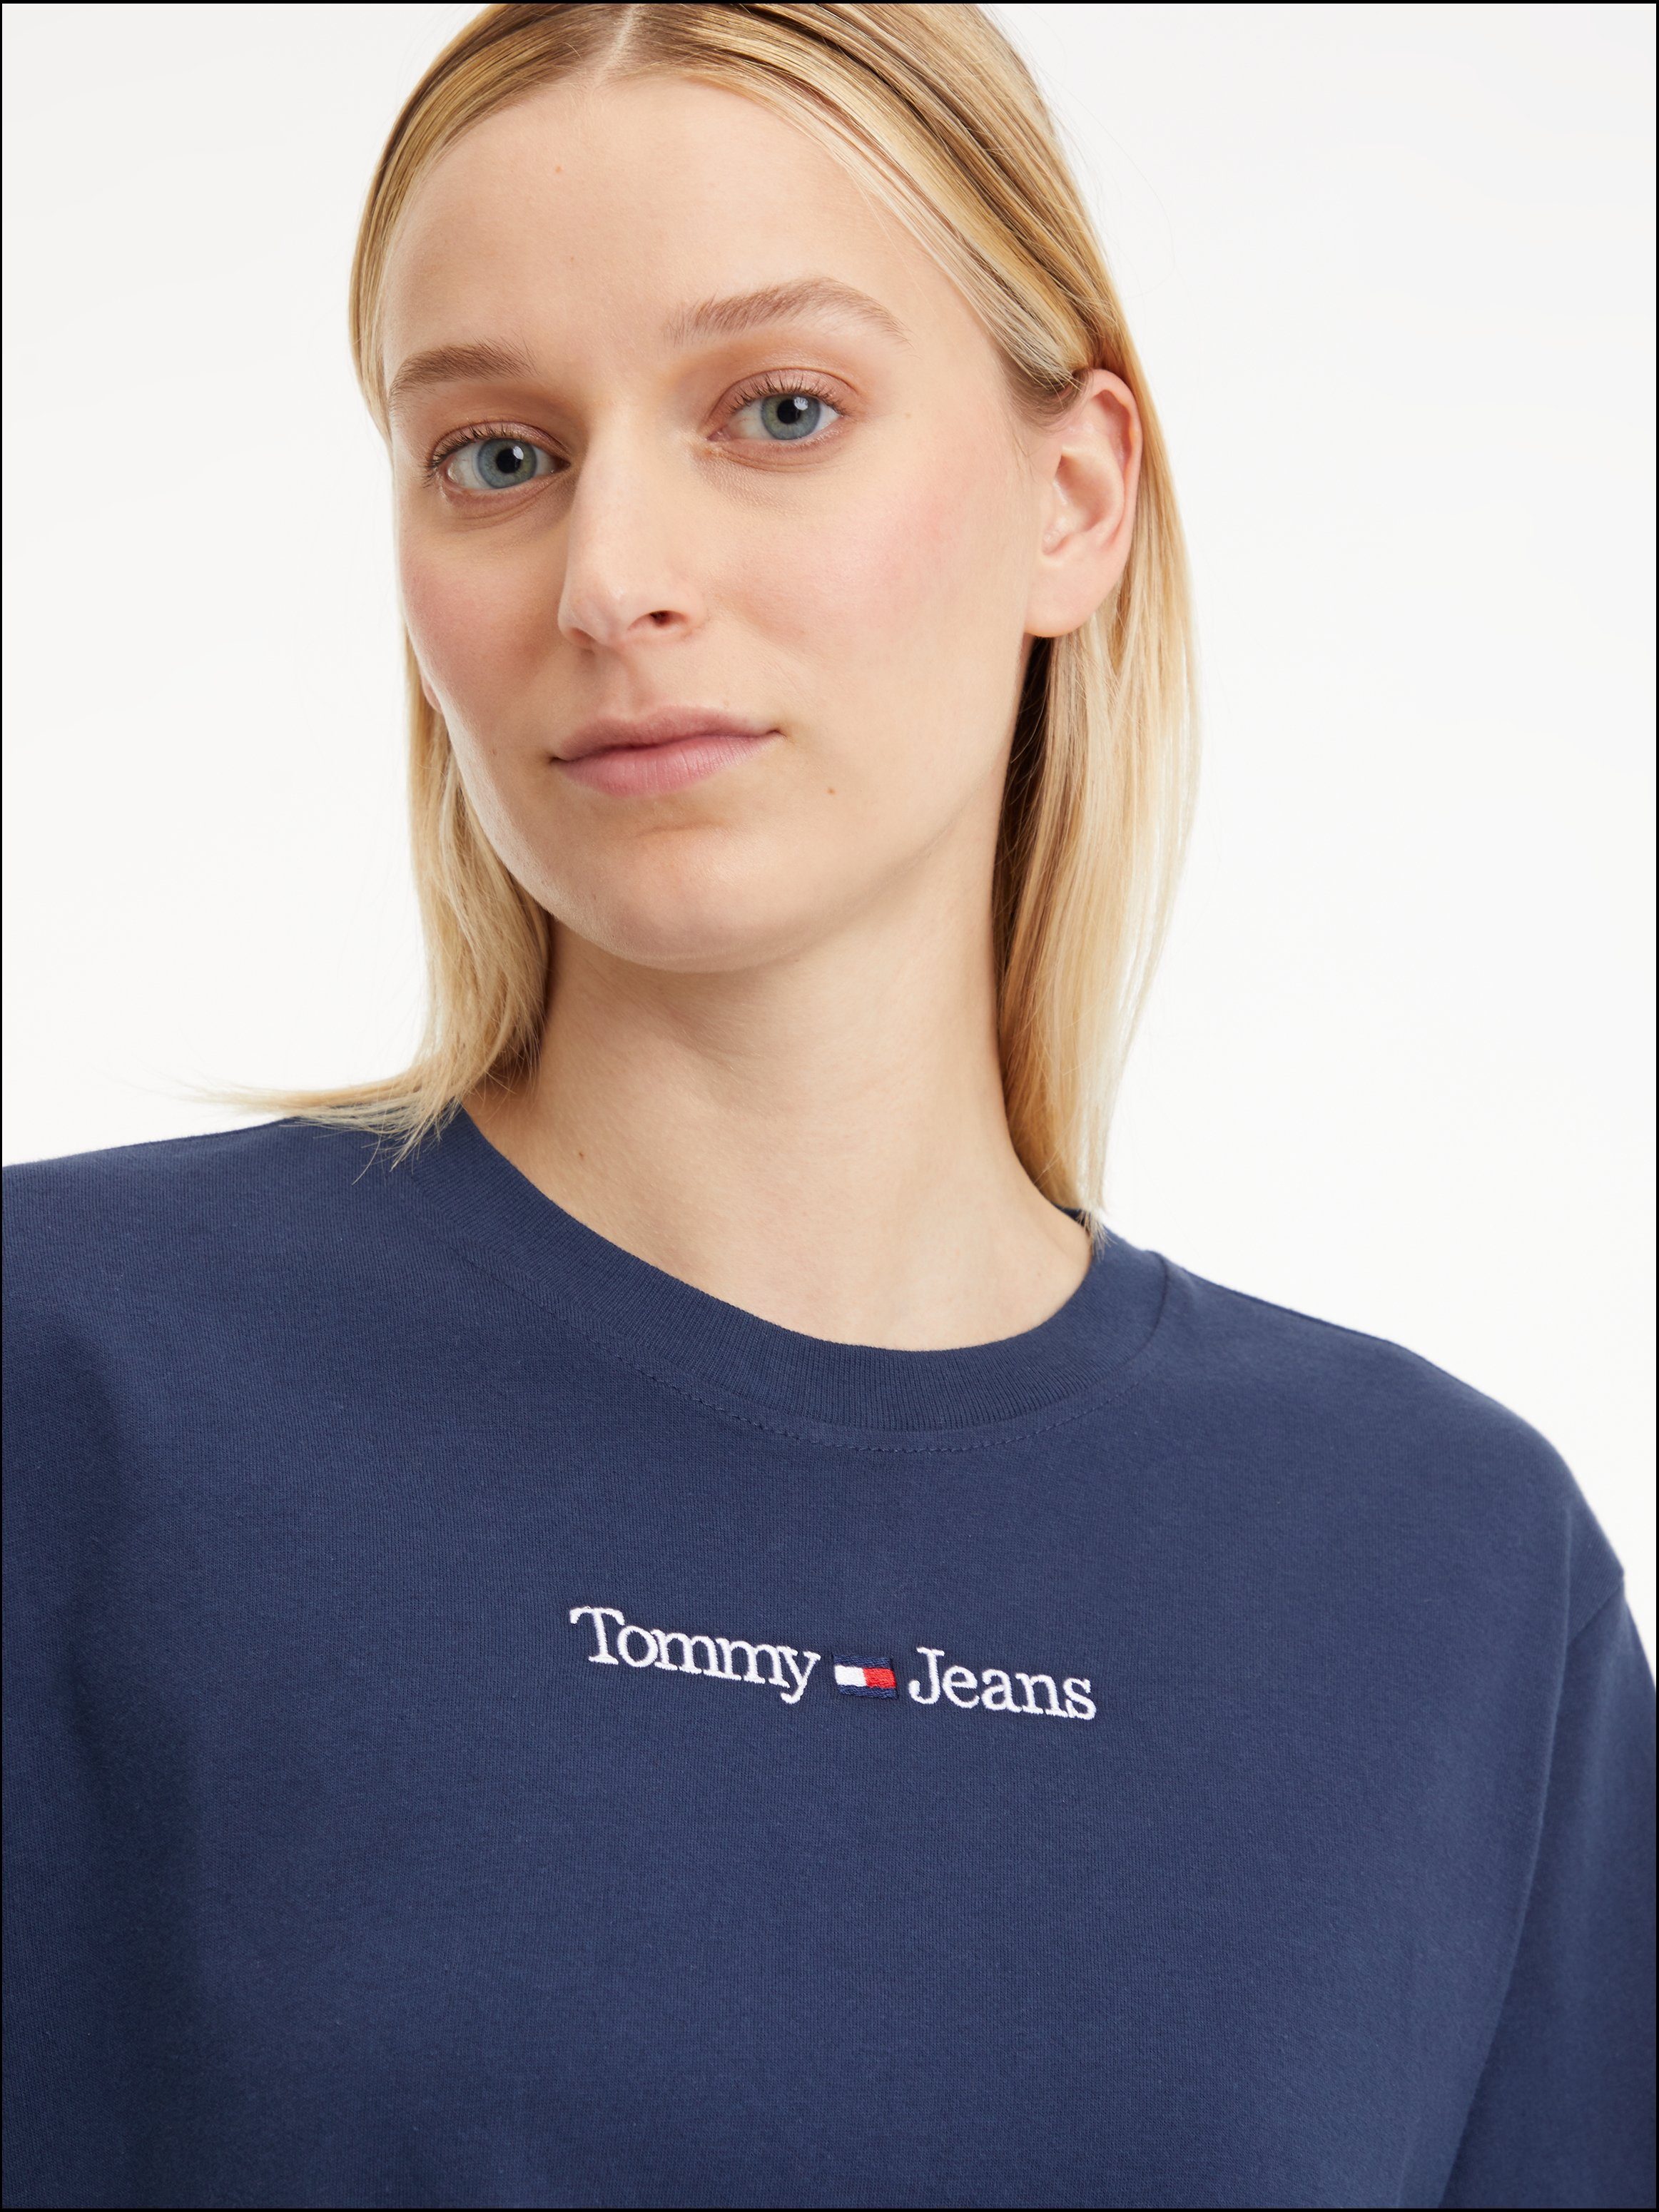 Tommy TEE TJW Linear Twilight-Navy Jeans Tommy Jeans Kurzarmshirt LINEAR Logoschriftzug SERIF mit CLS